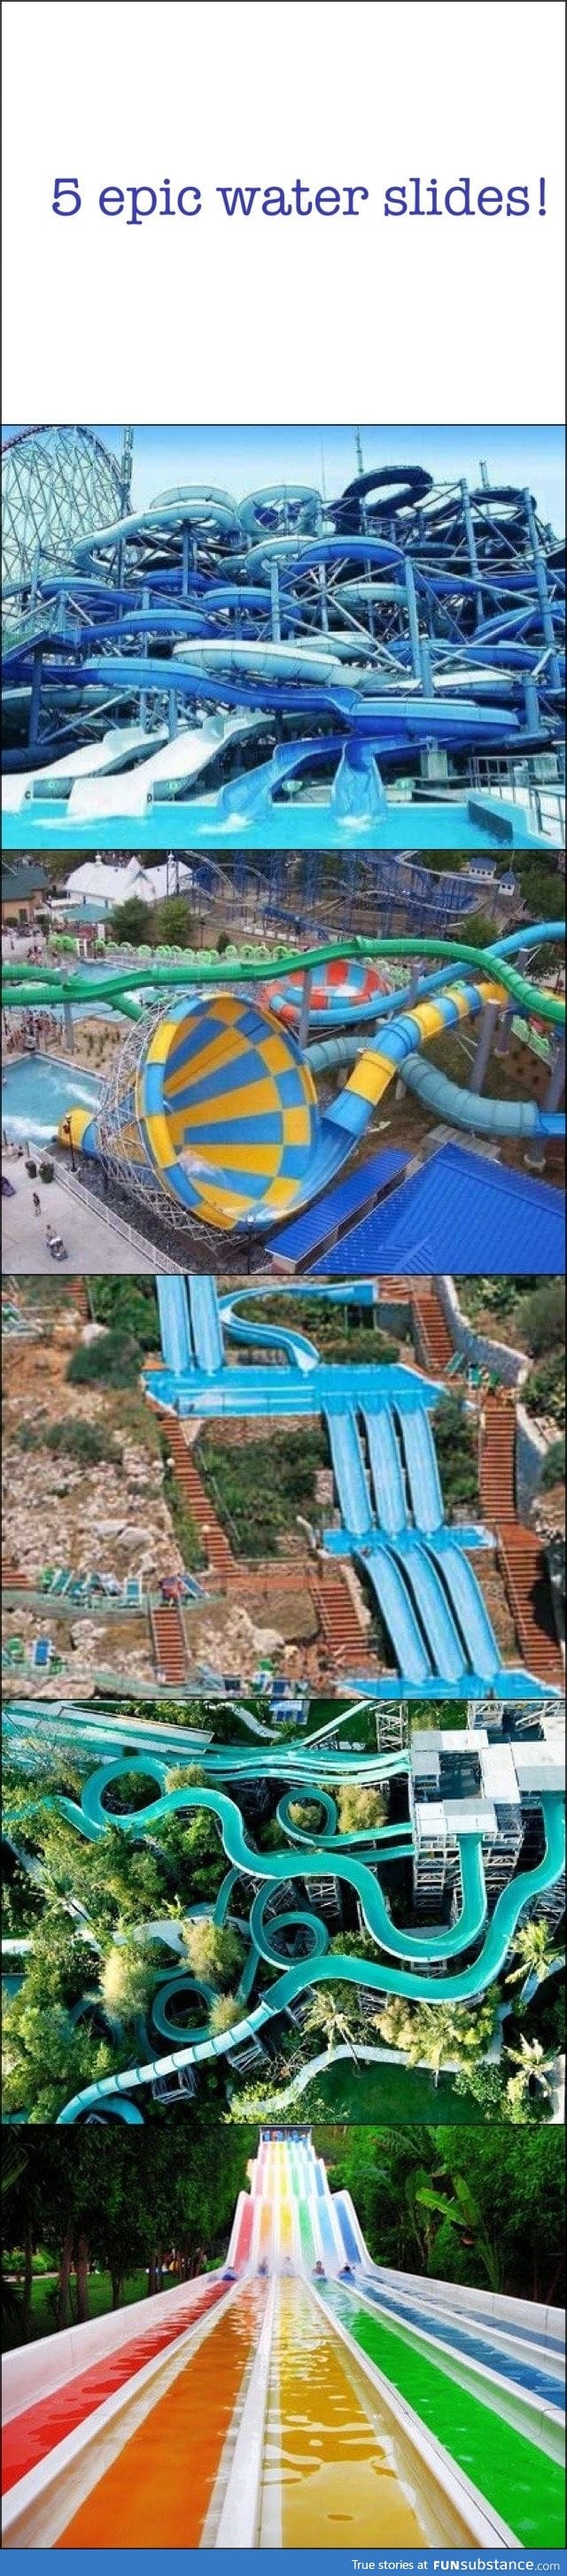 Epic water slides